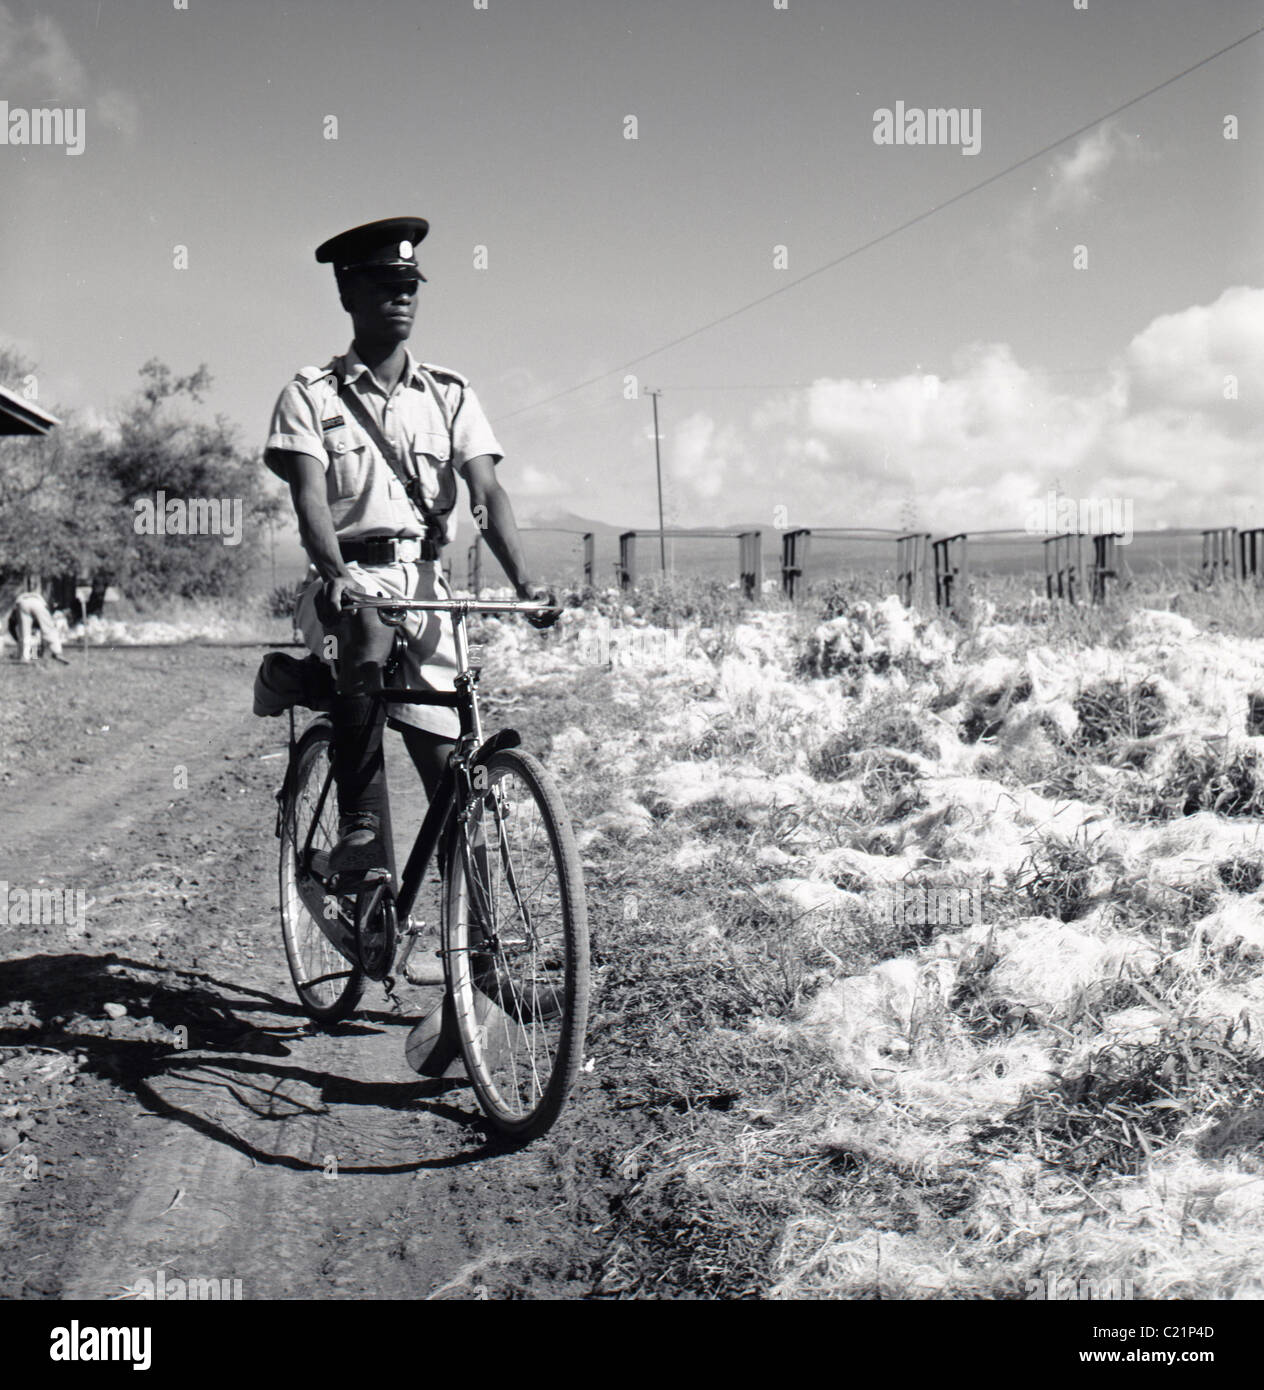 Tunisia, 1950s. Tunisia, 1950s. Local native Tunisian policeman cycling, in this historical photograph by J Allan Cash. Stock Photo